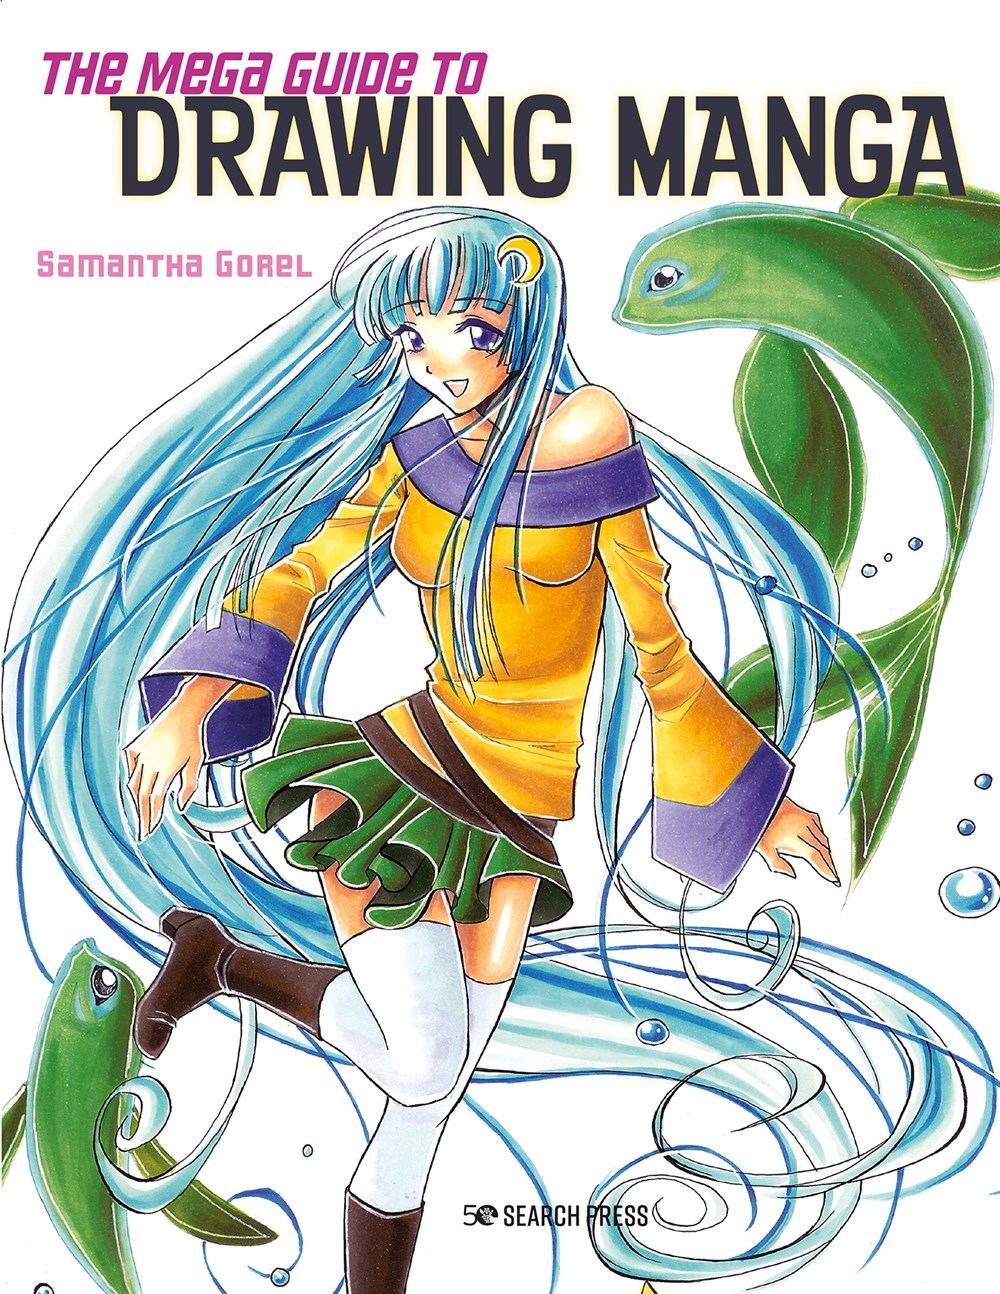 The Mega Guide to Drawing Manga